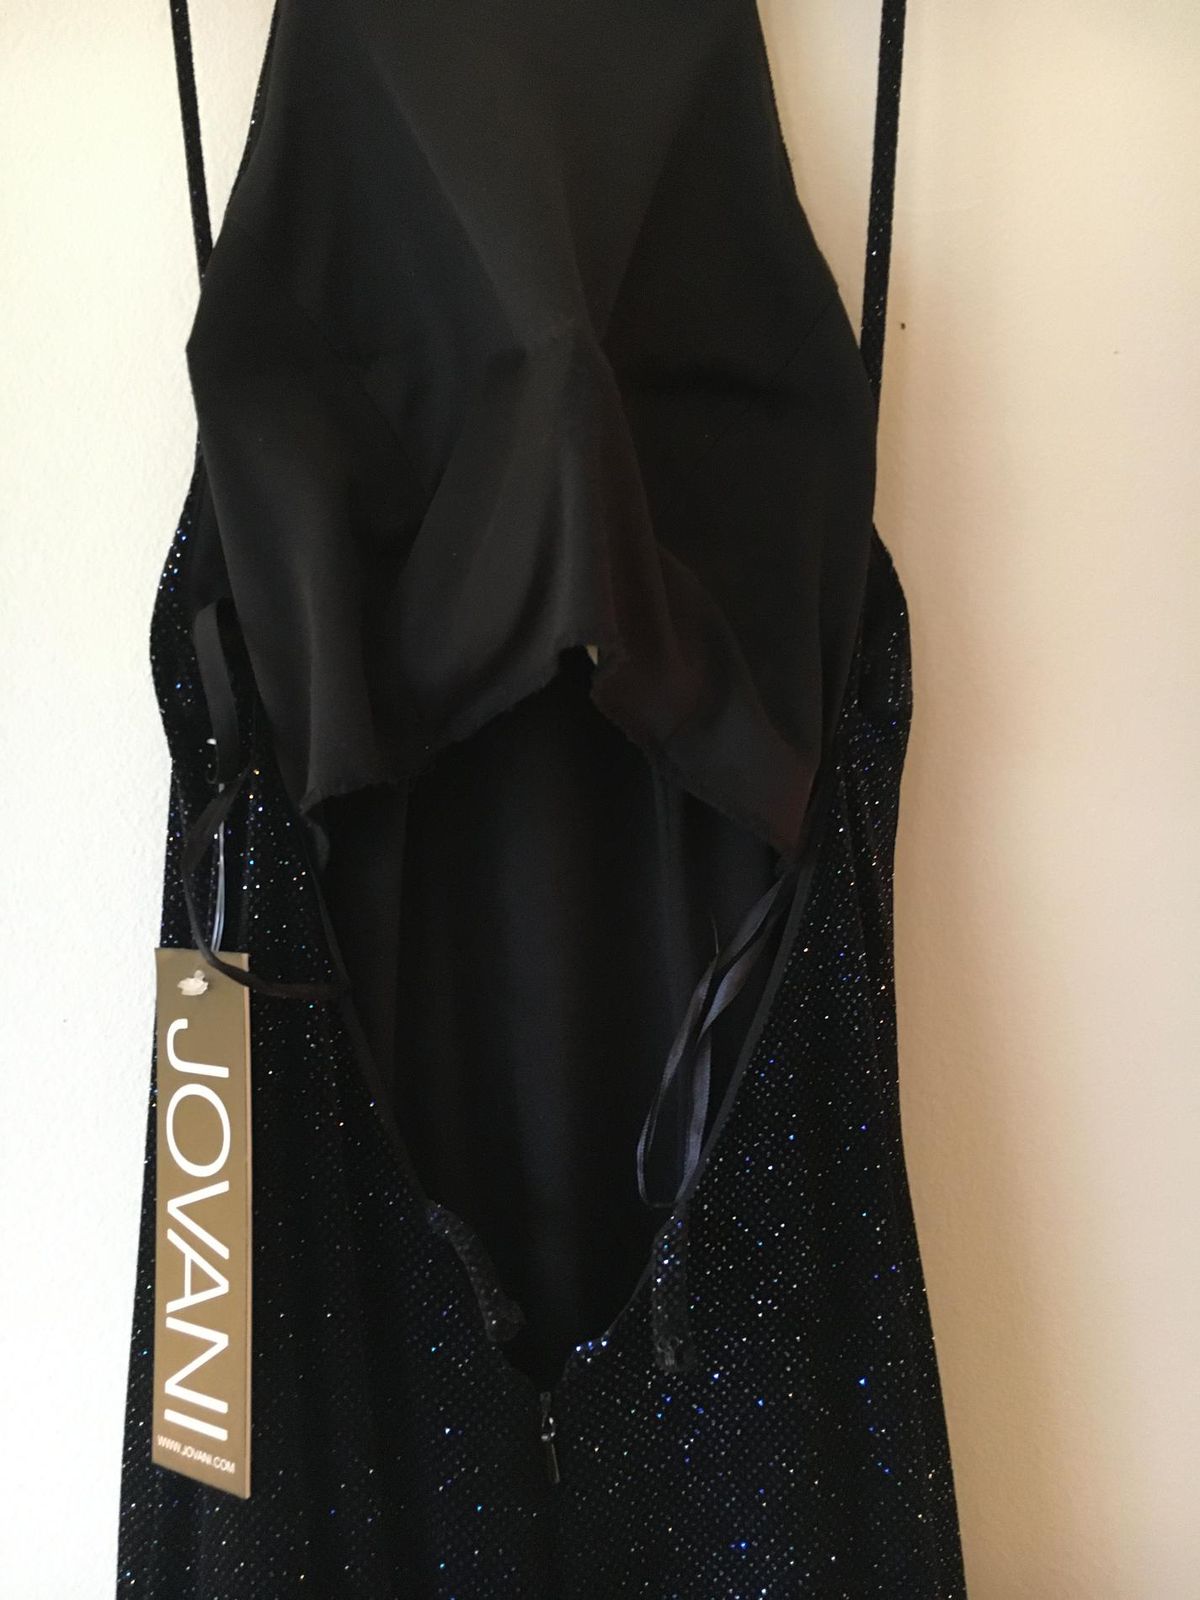 Jovani Size 4 Prom Navy Black Mermaid Dress on Queenly